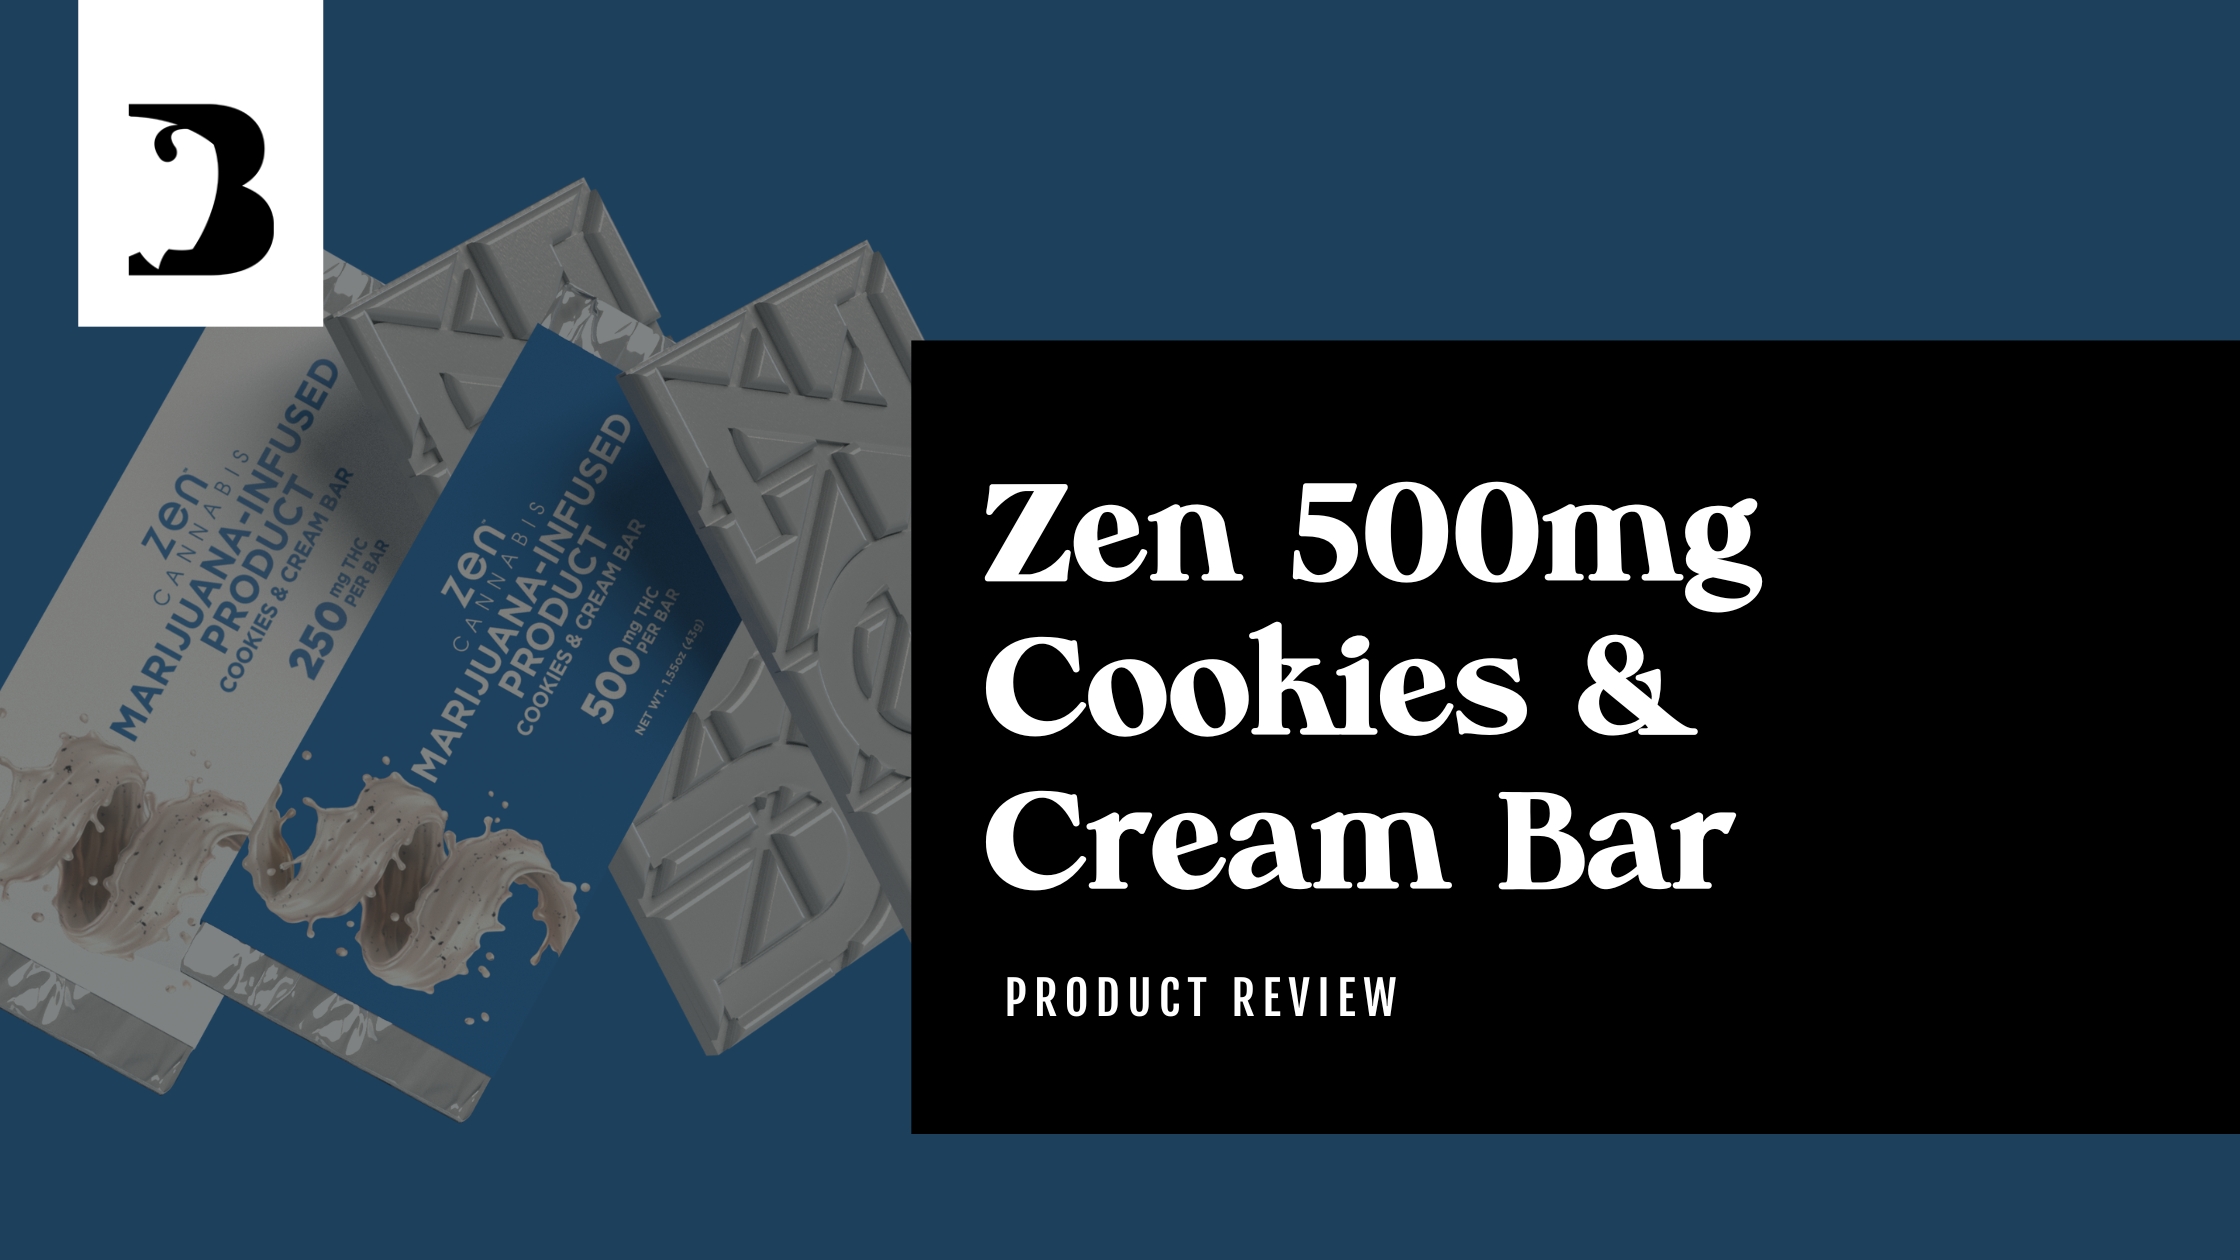 Zen 500mg Cannabis Infused Cookies & Cream Chocolate Bar